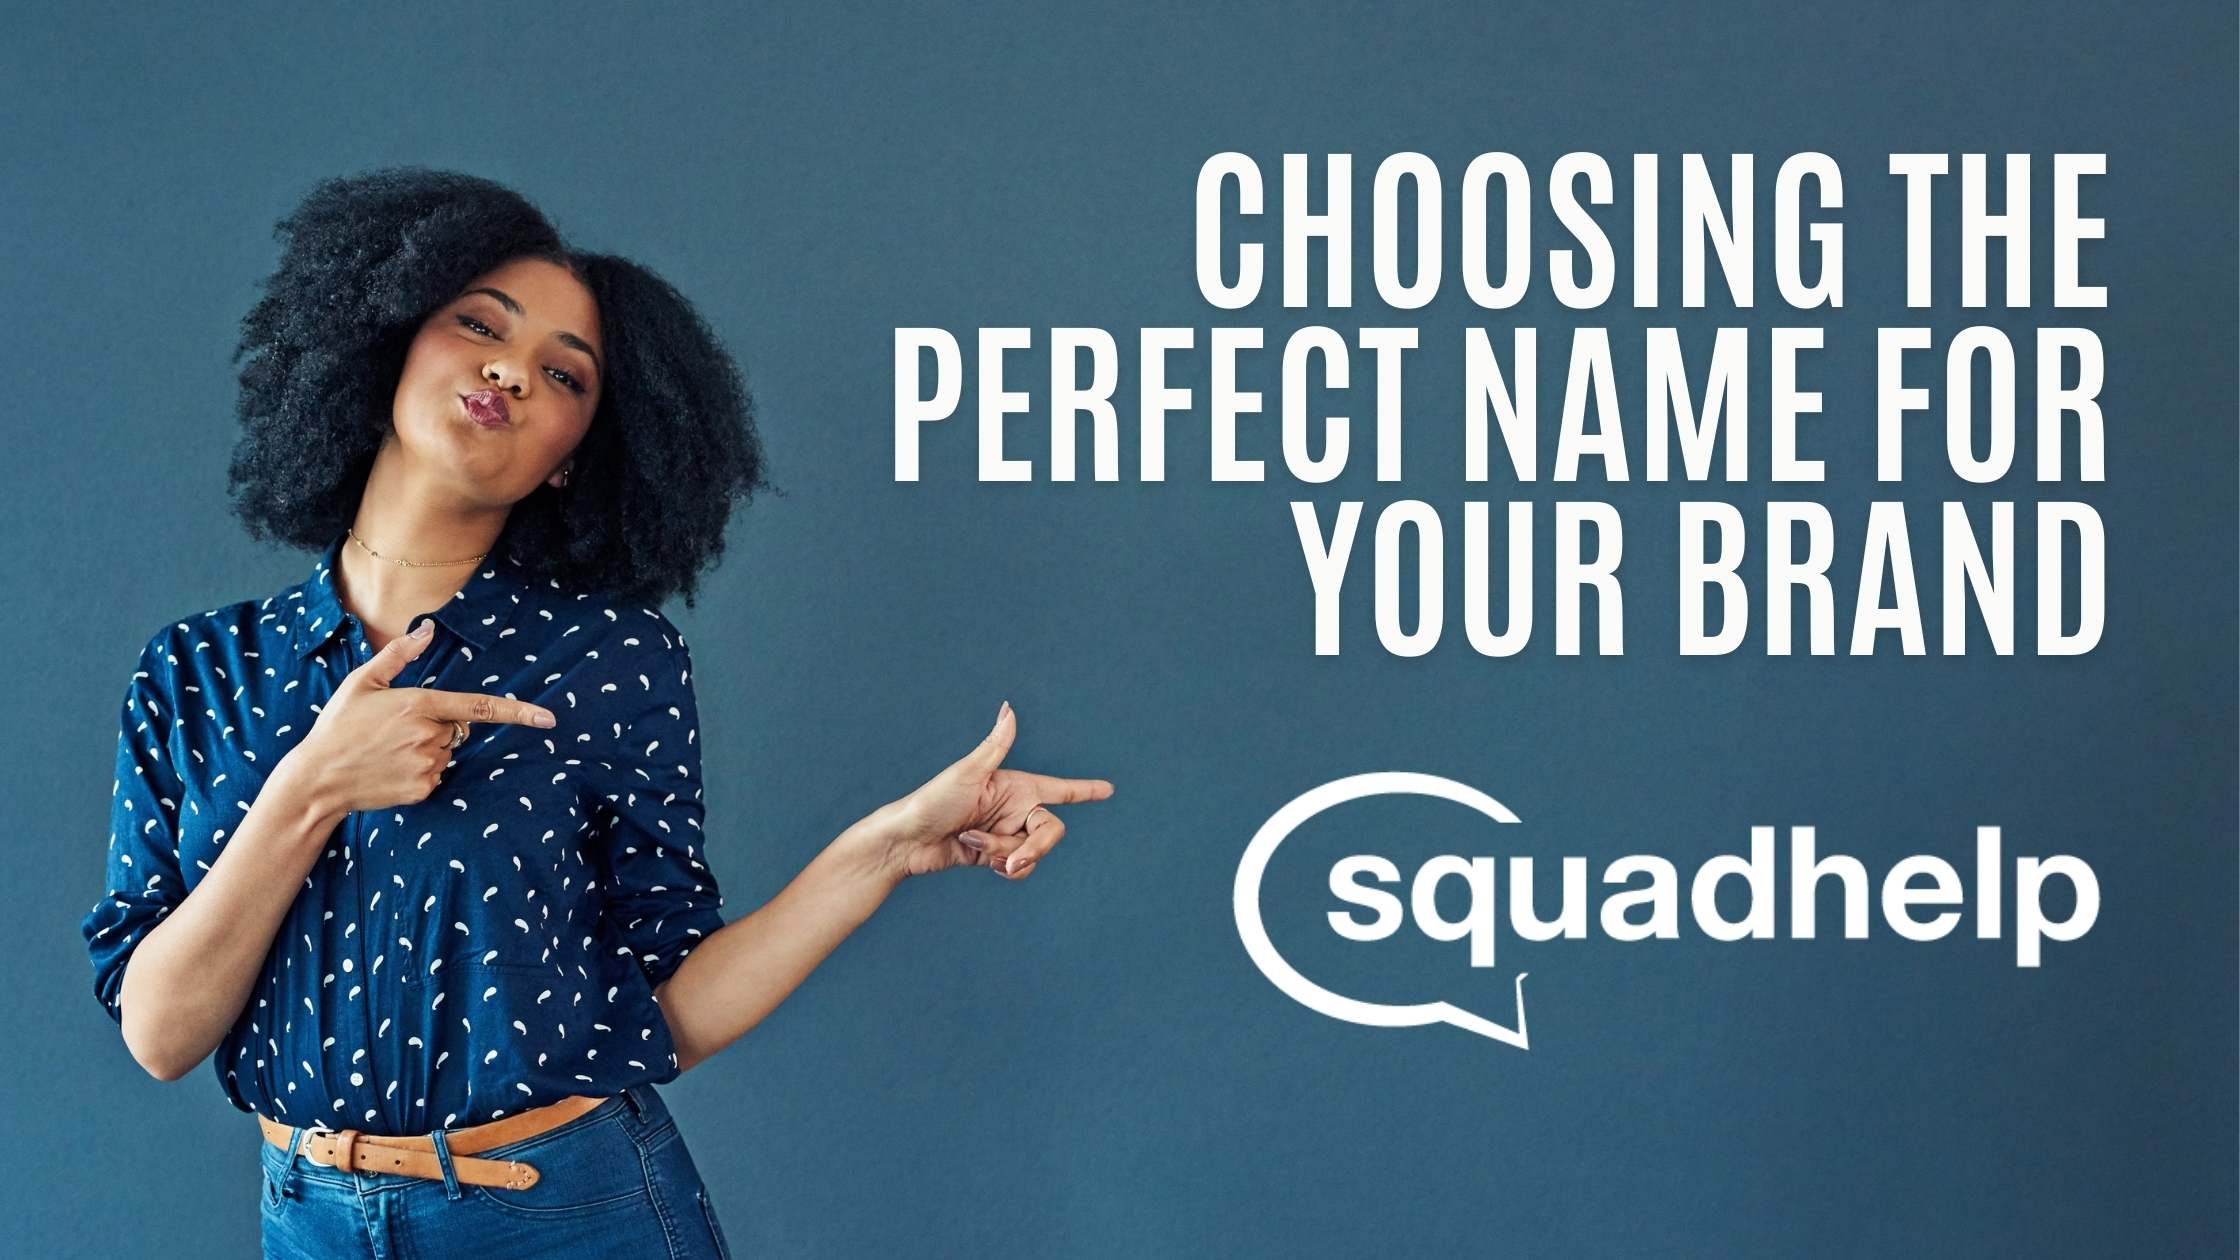 Squadhelp_Choosing the Perfect Brand Name